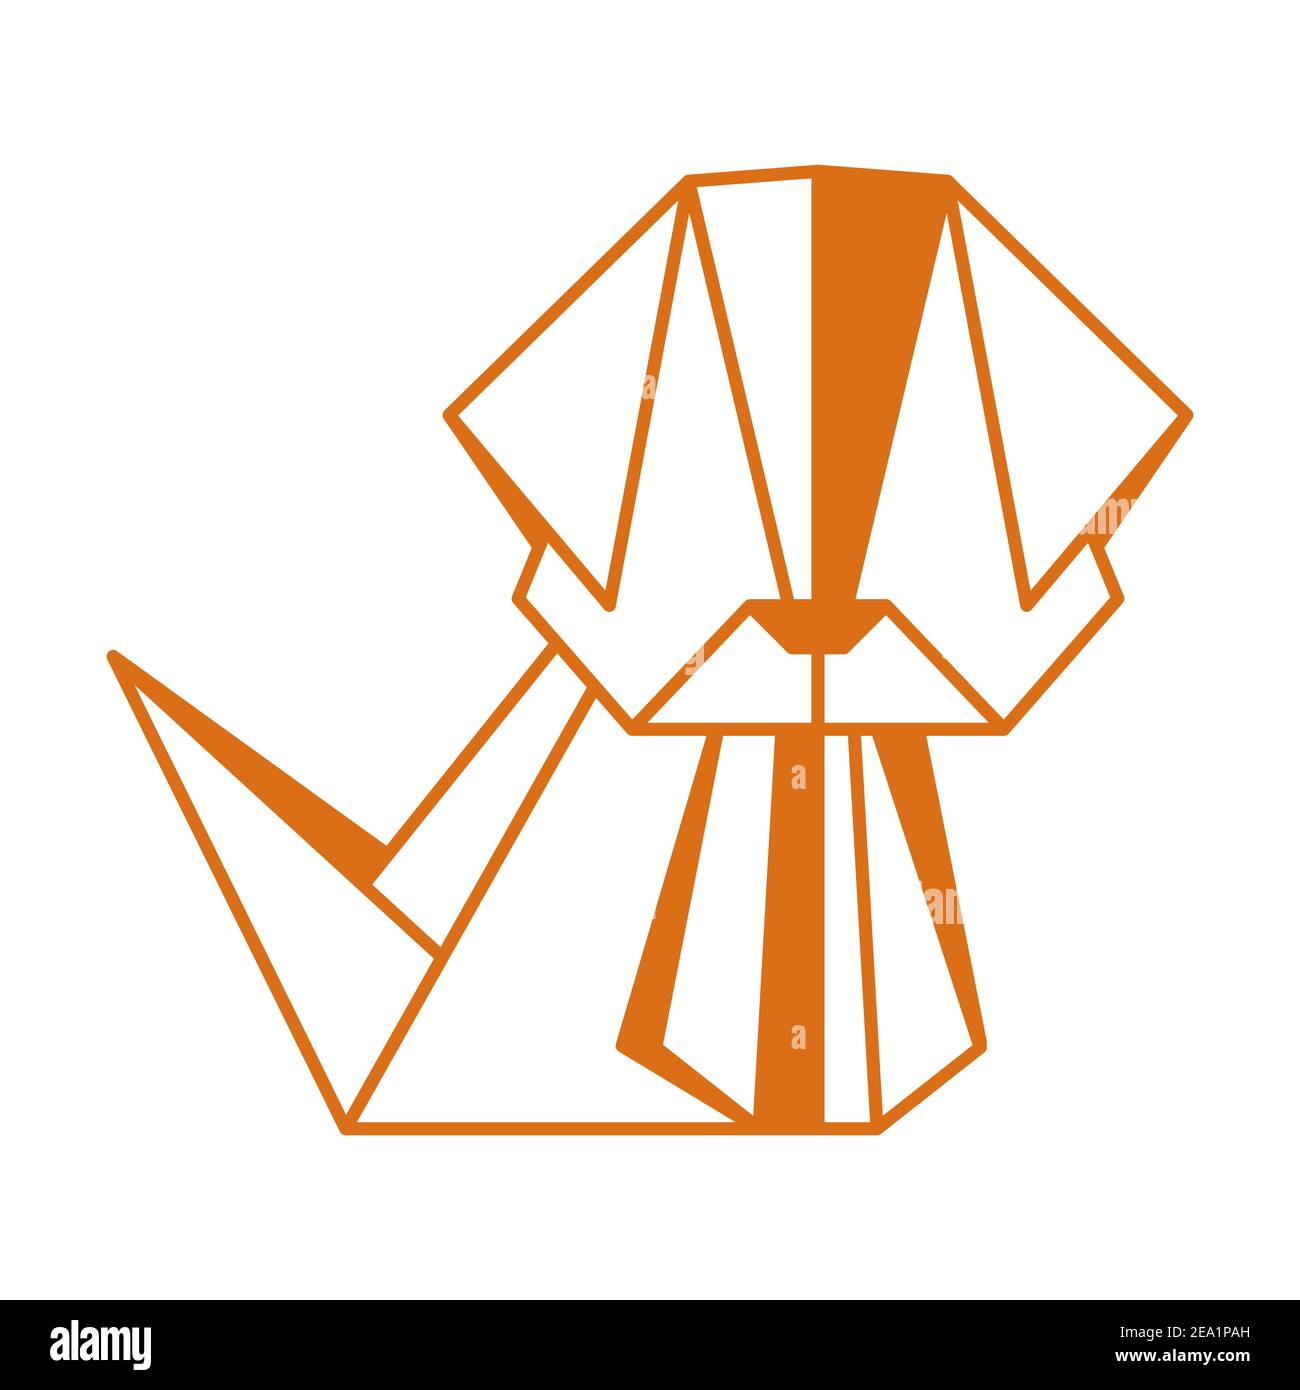 Illustration of origami dog. Stock Vector